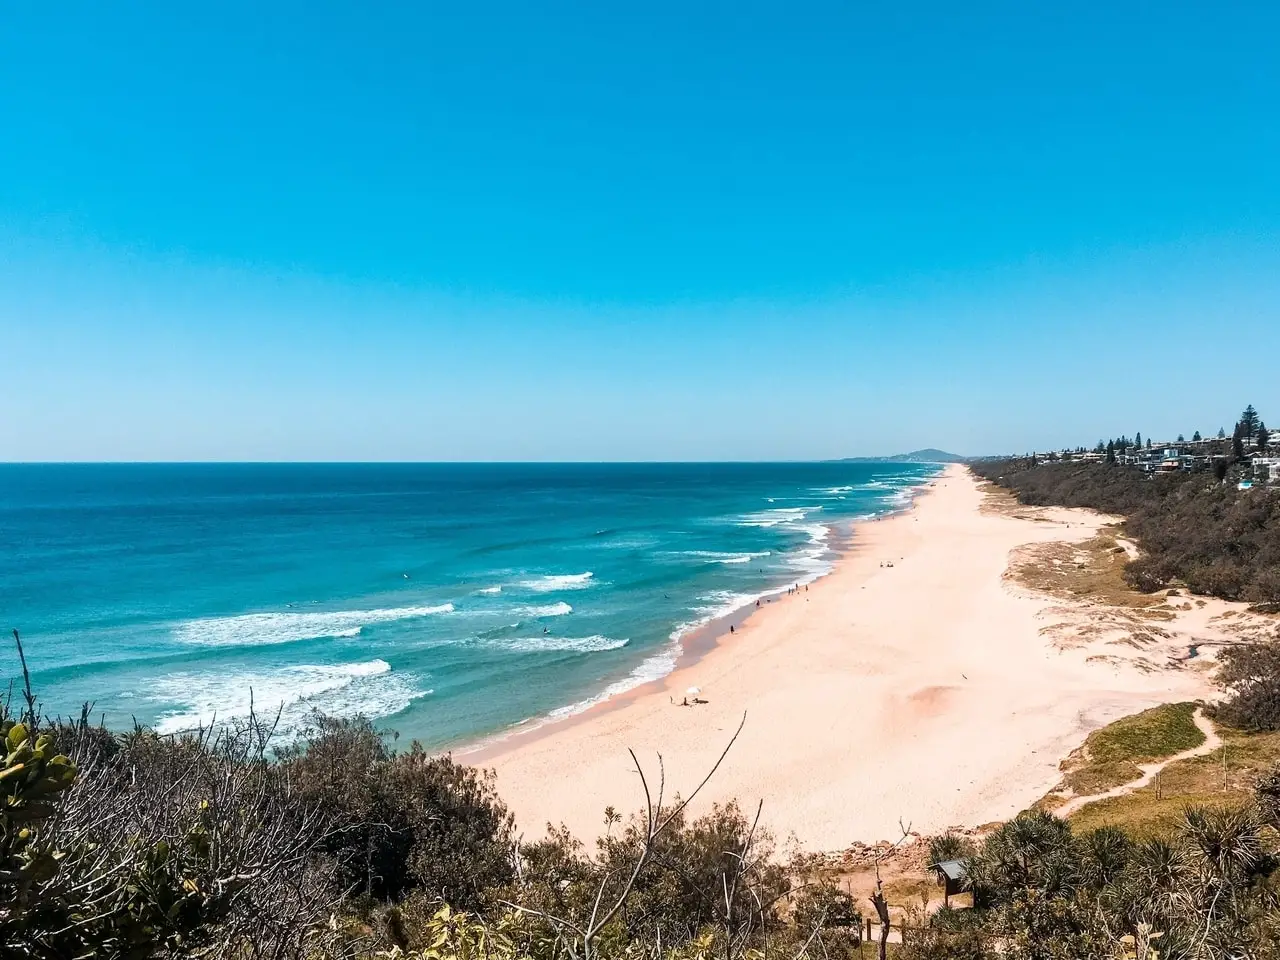 Sunshine beach, the best beach in Noosa Australia